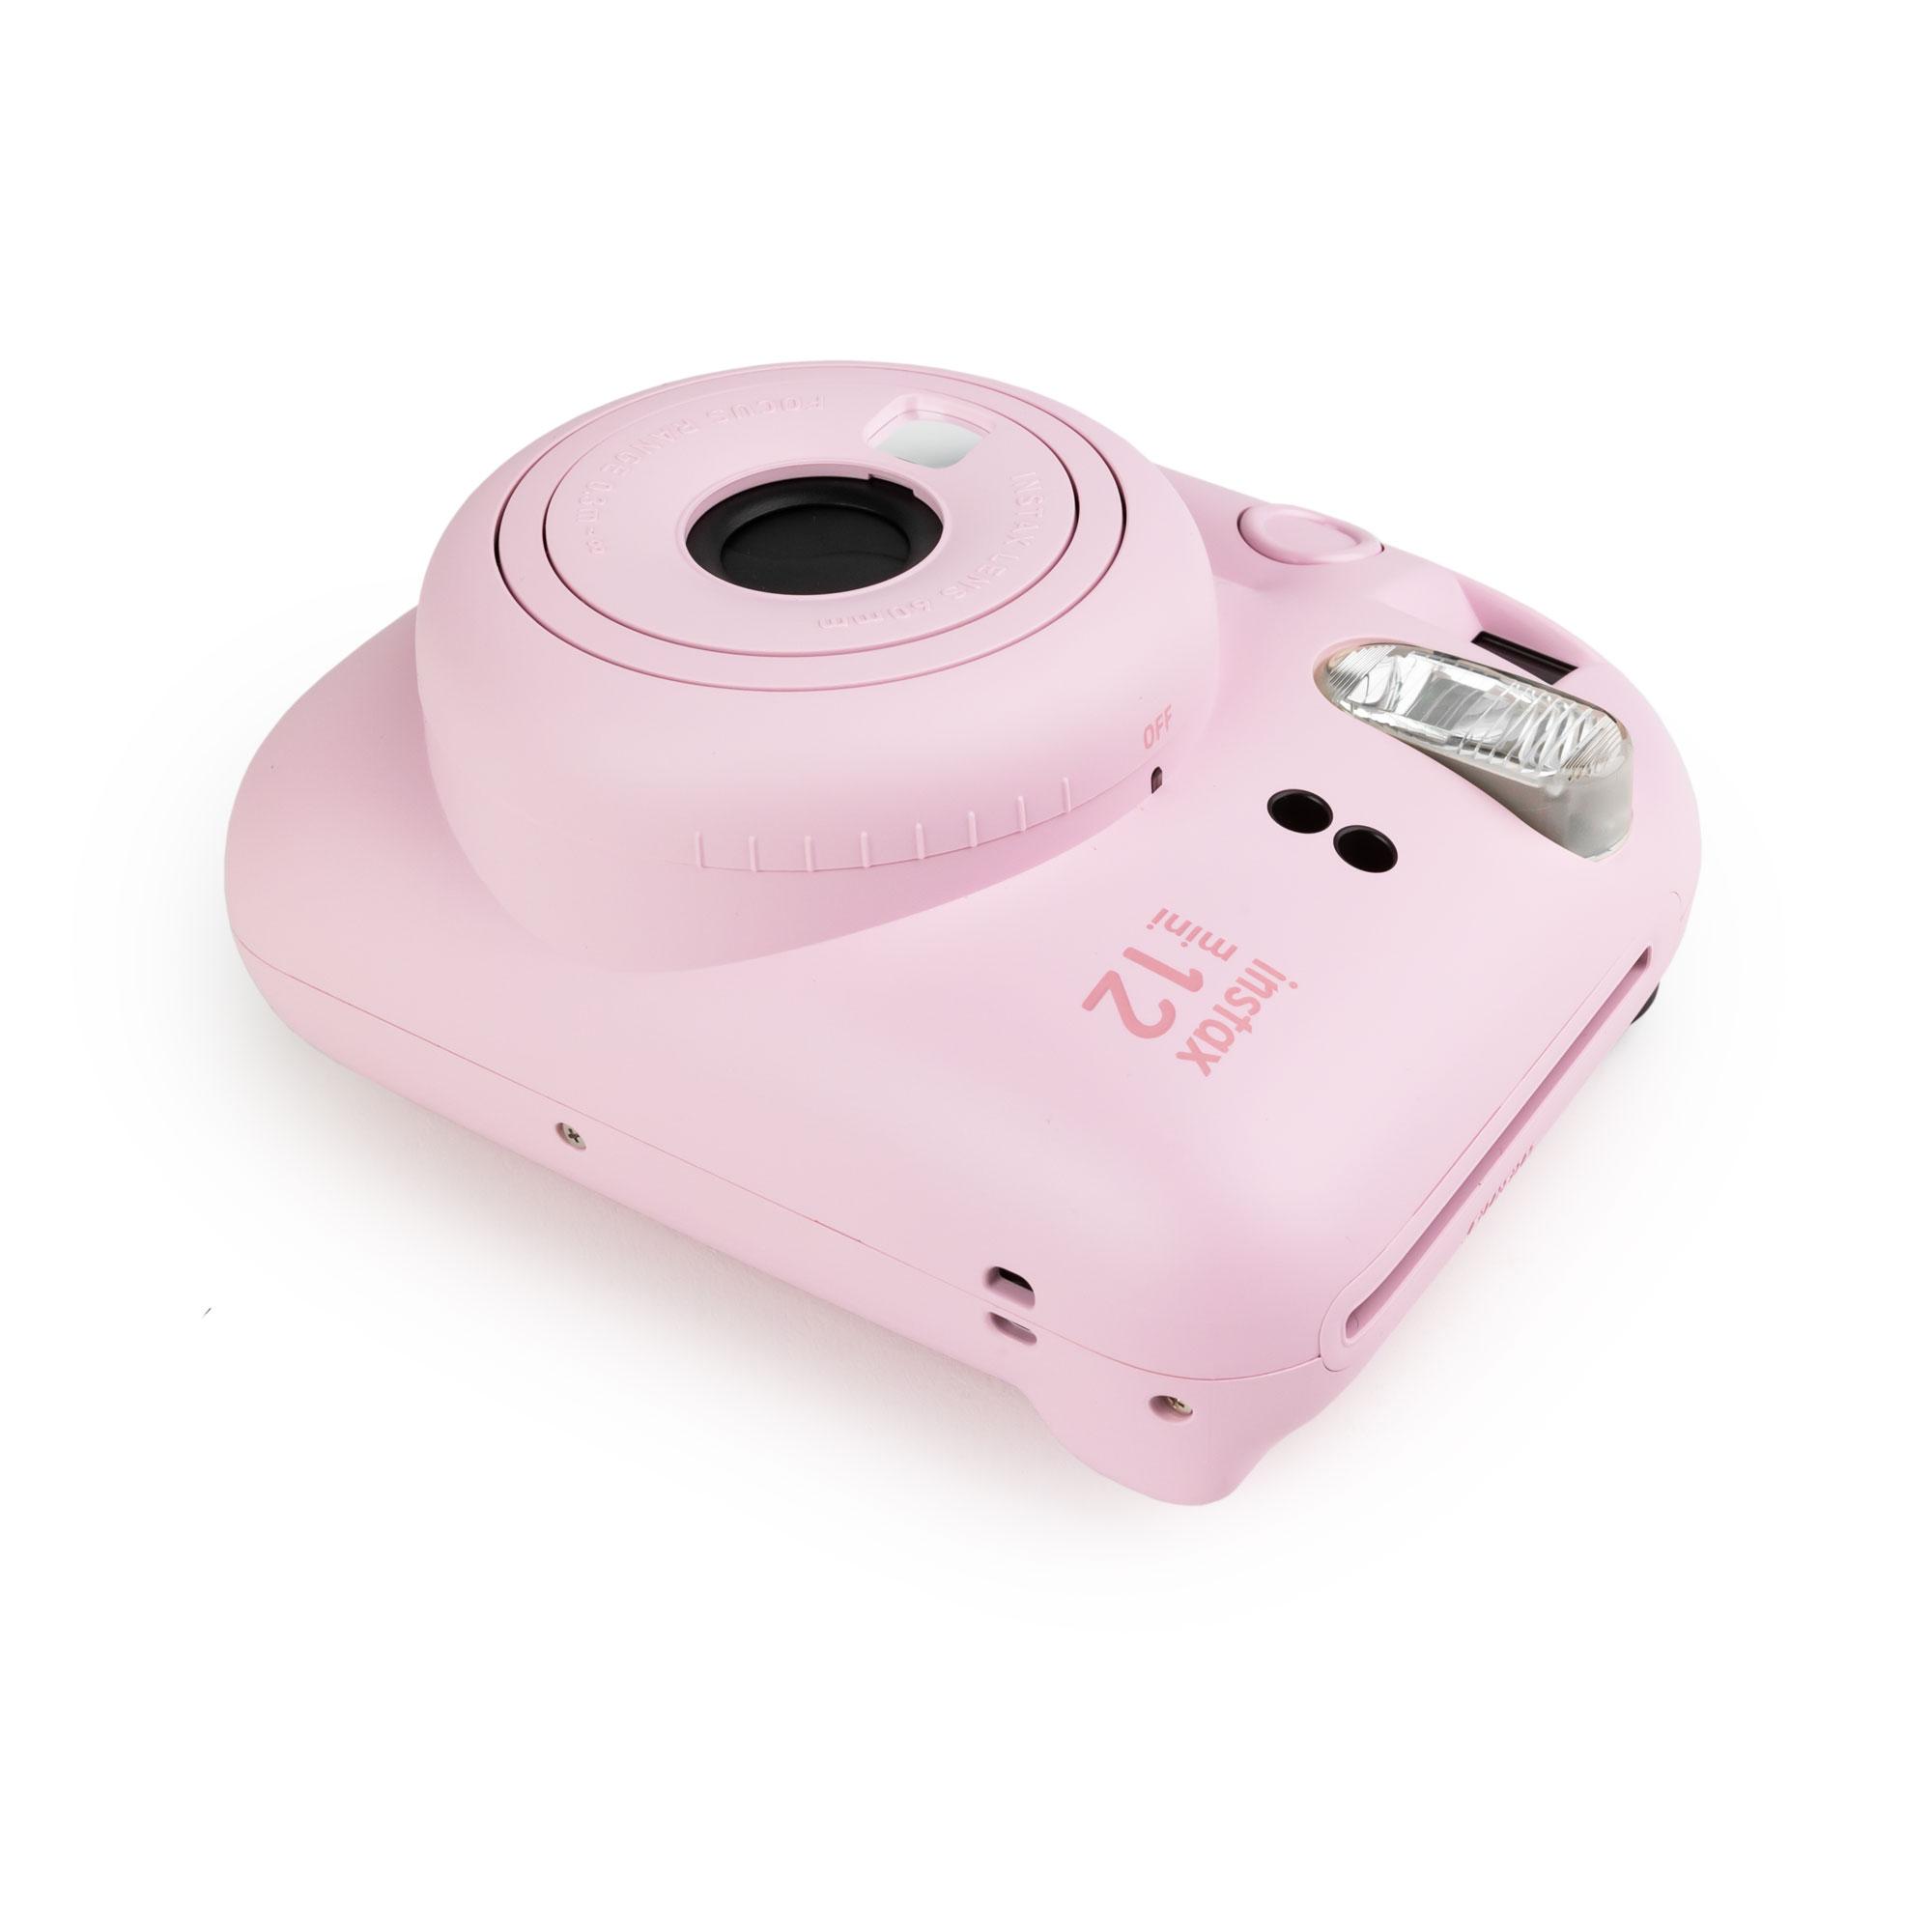 | | | Photo Instax Kameras Sofortbildkamera blossom 12 Mini Lang Fuji Kamera pink Instax |